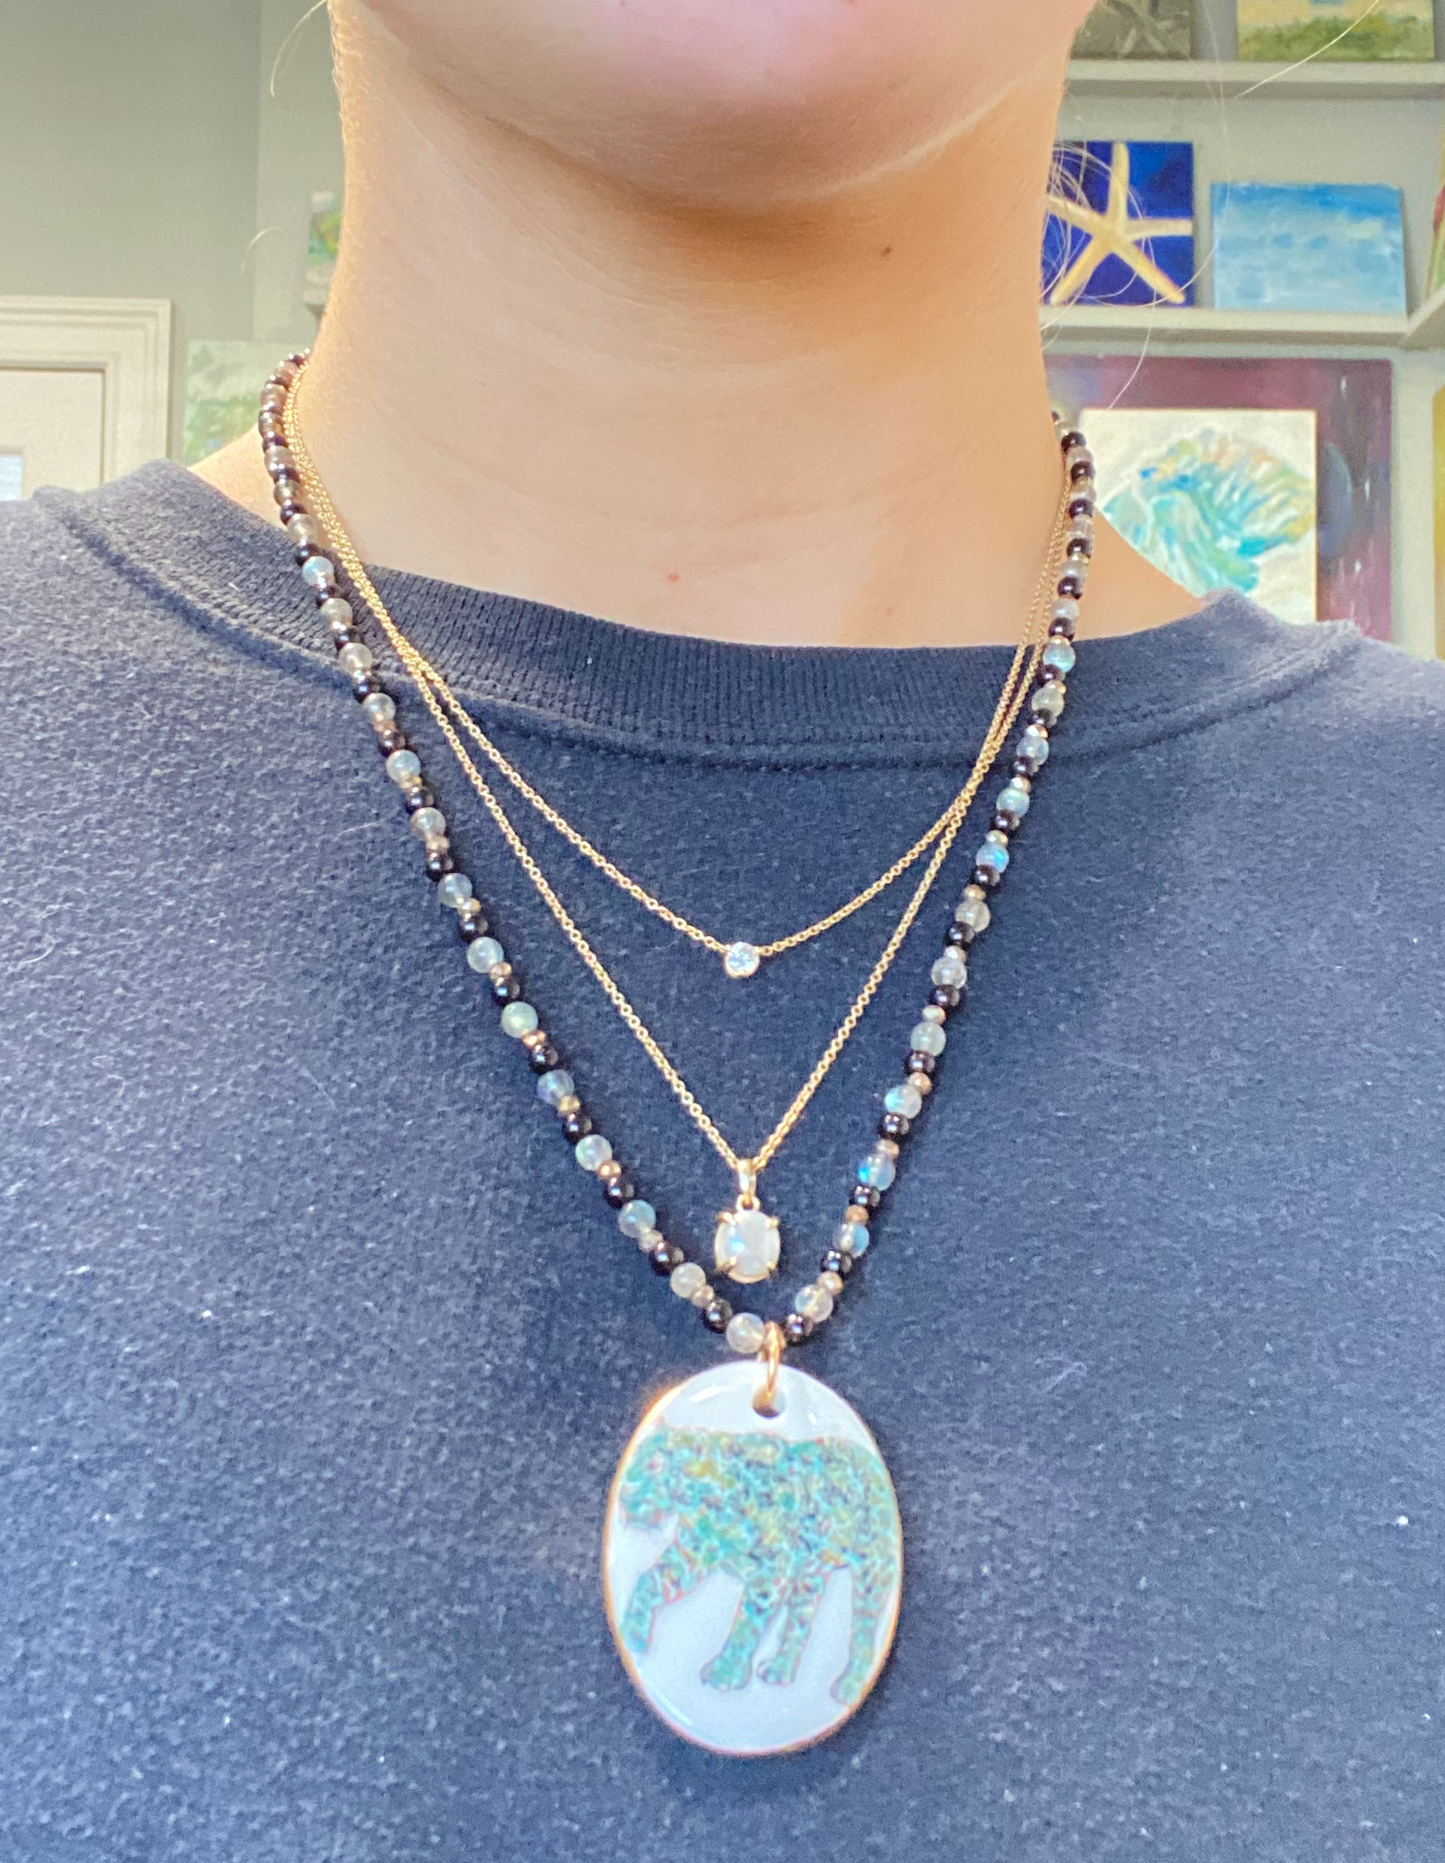 Full body jaguar pendant necklace